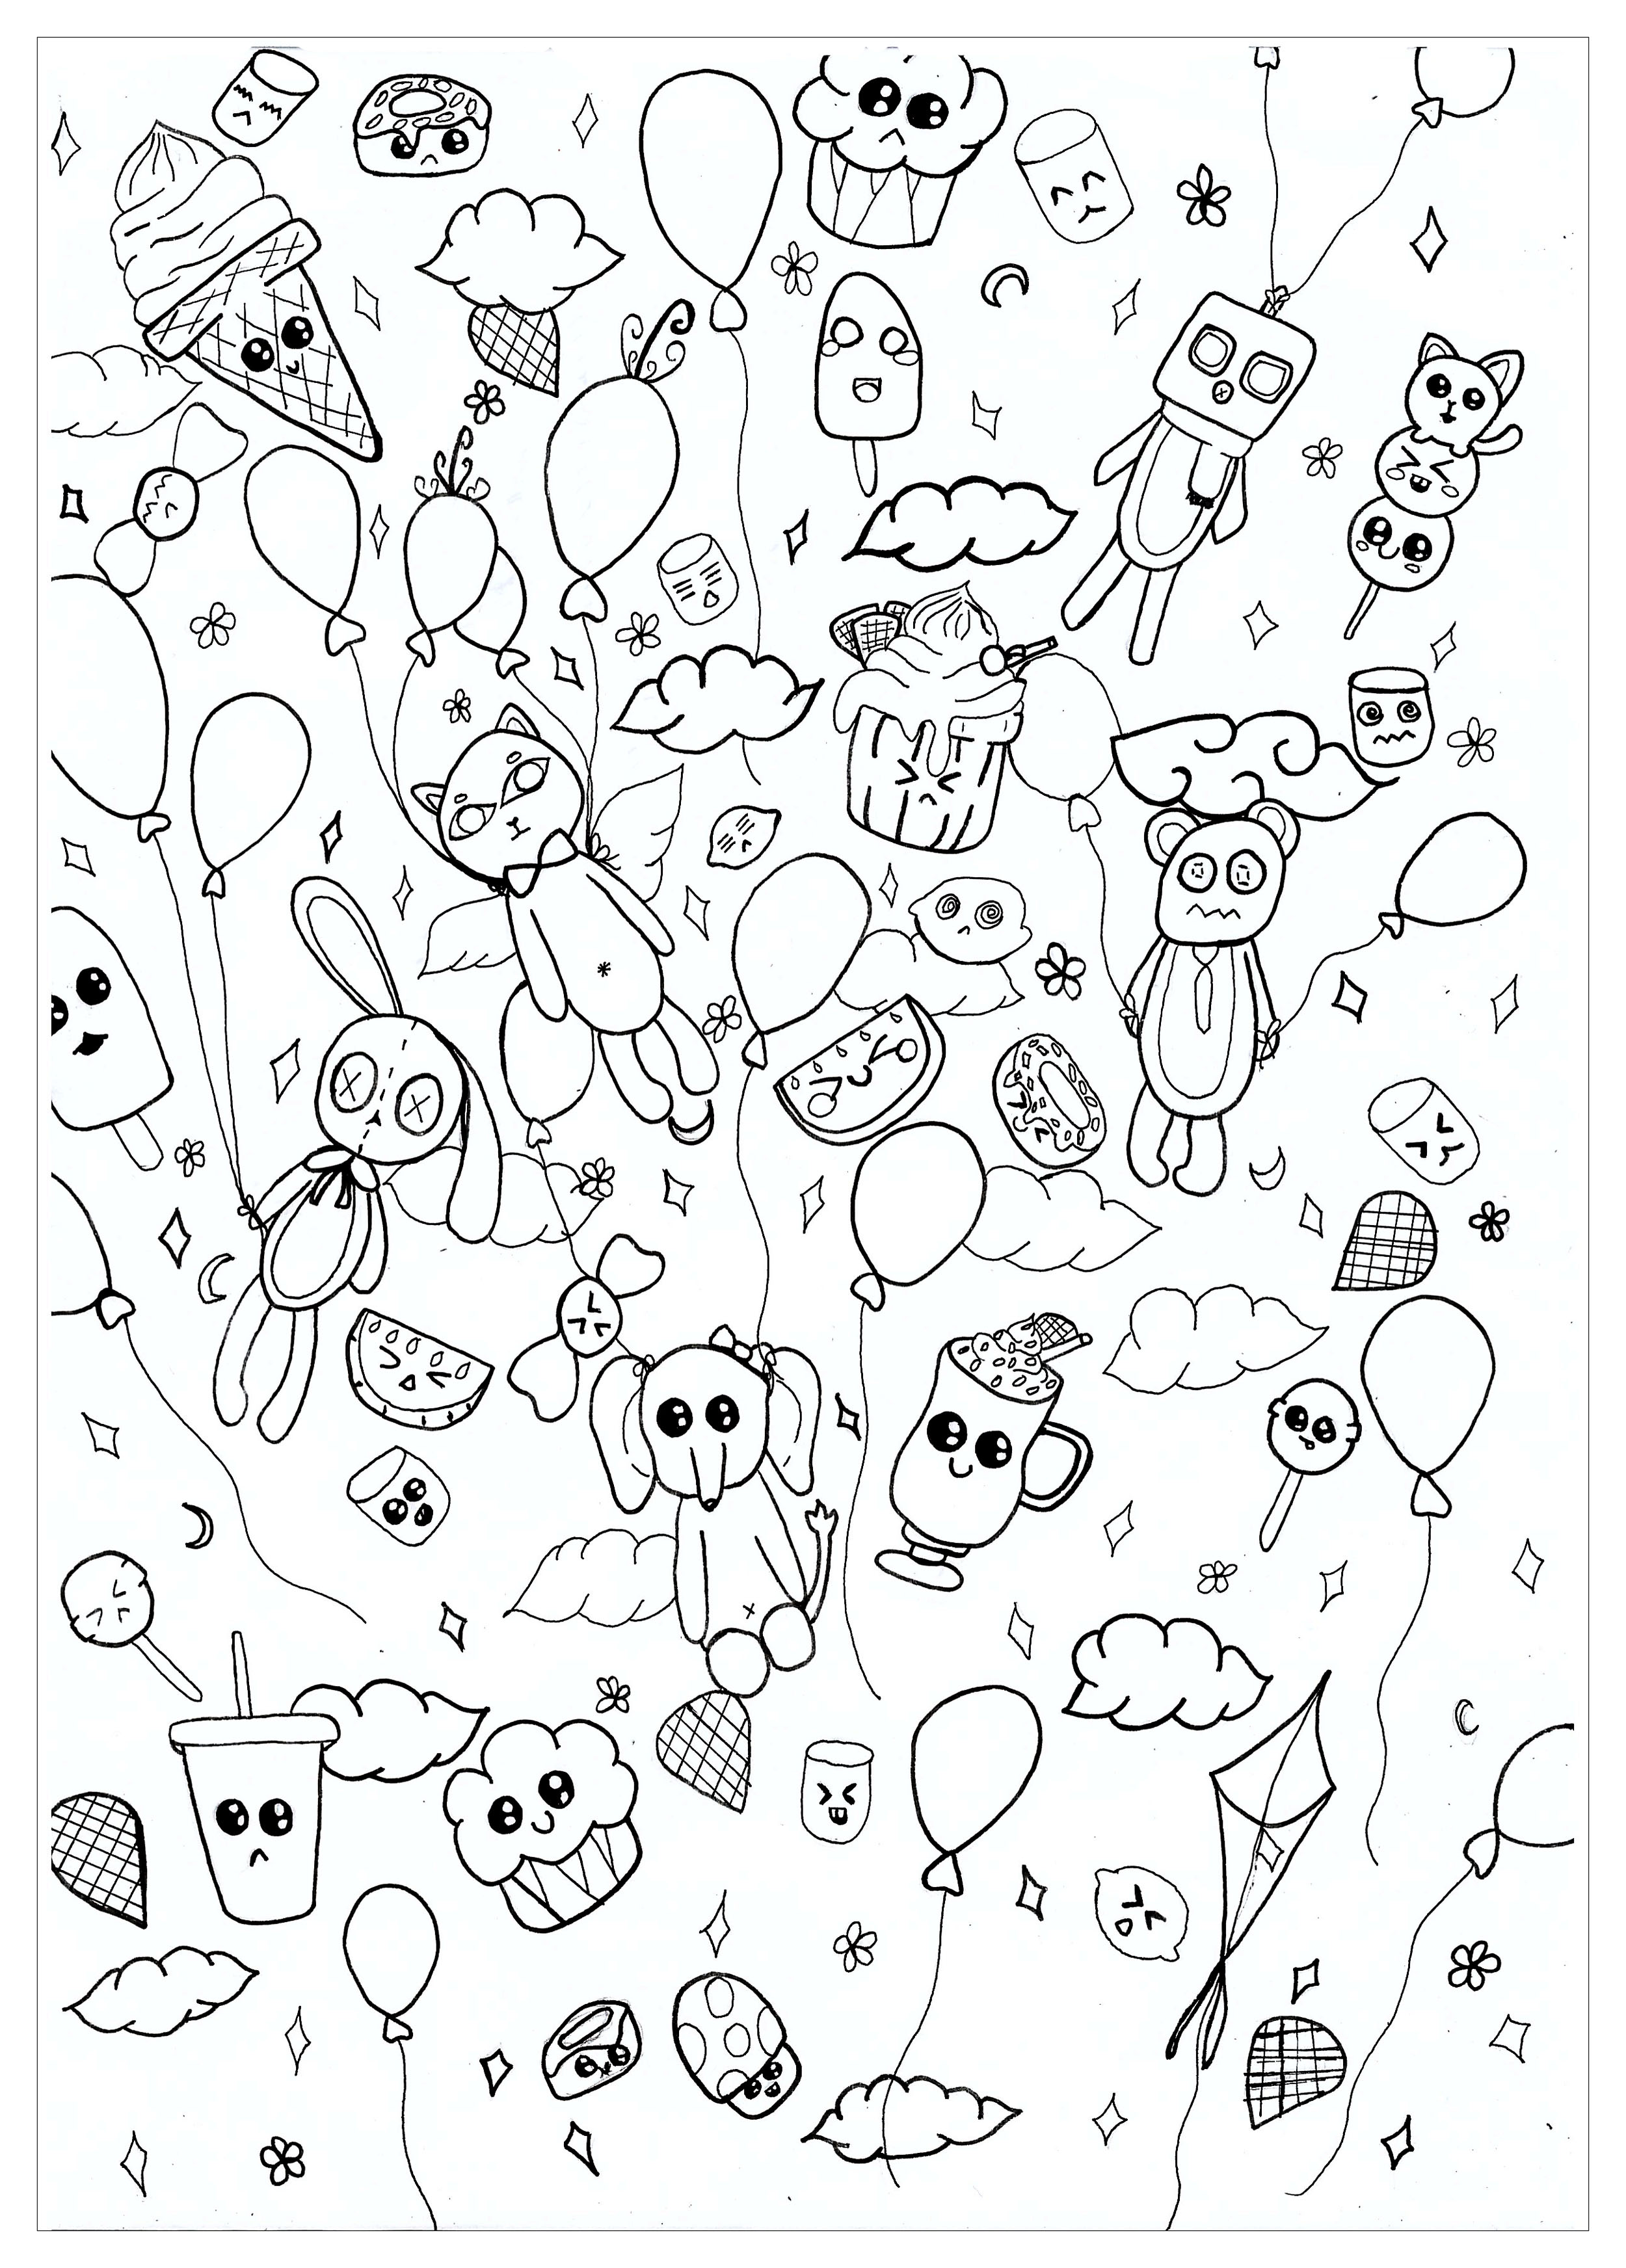 Coloring kawaii doodle by chloe